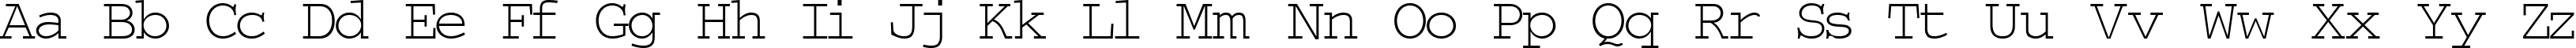 Пример написания английского алфавита шрифтом TypeWriter Normal